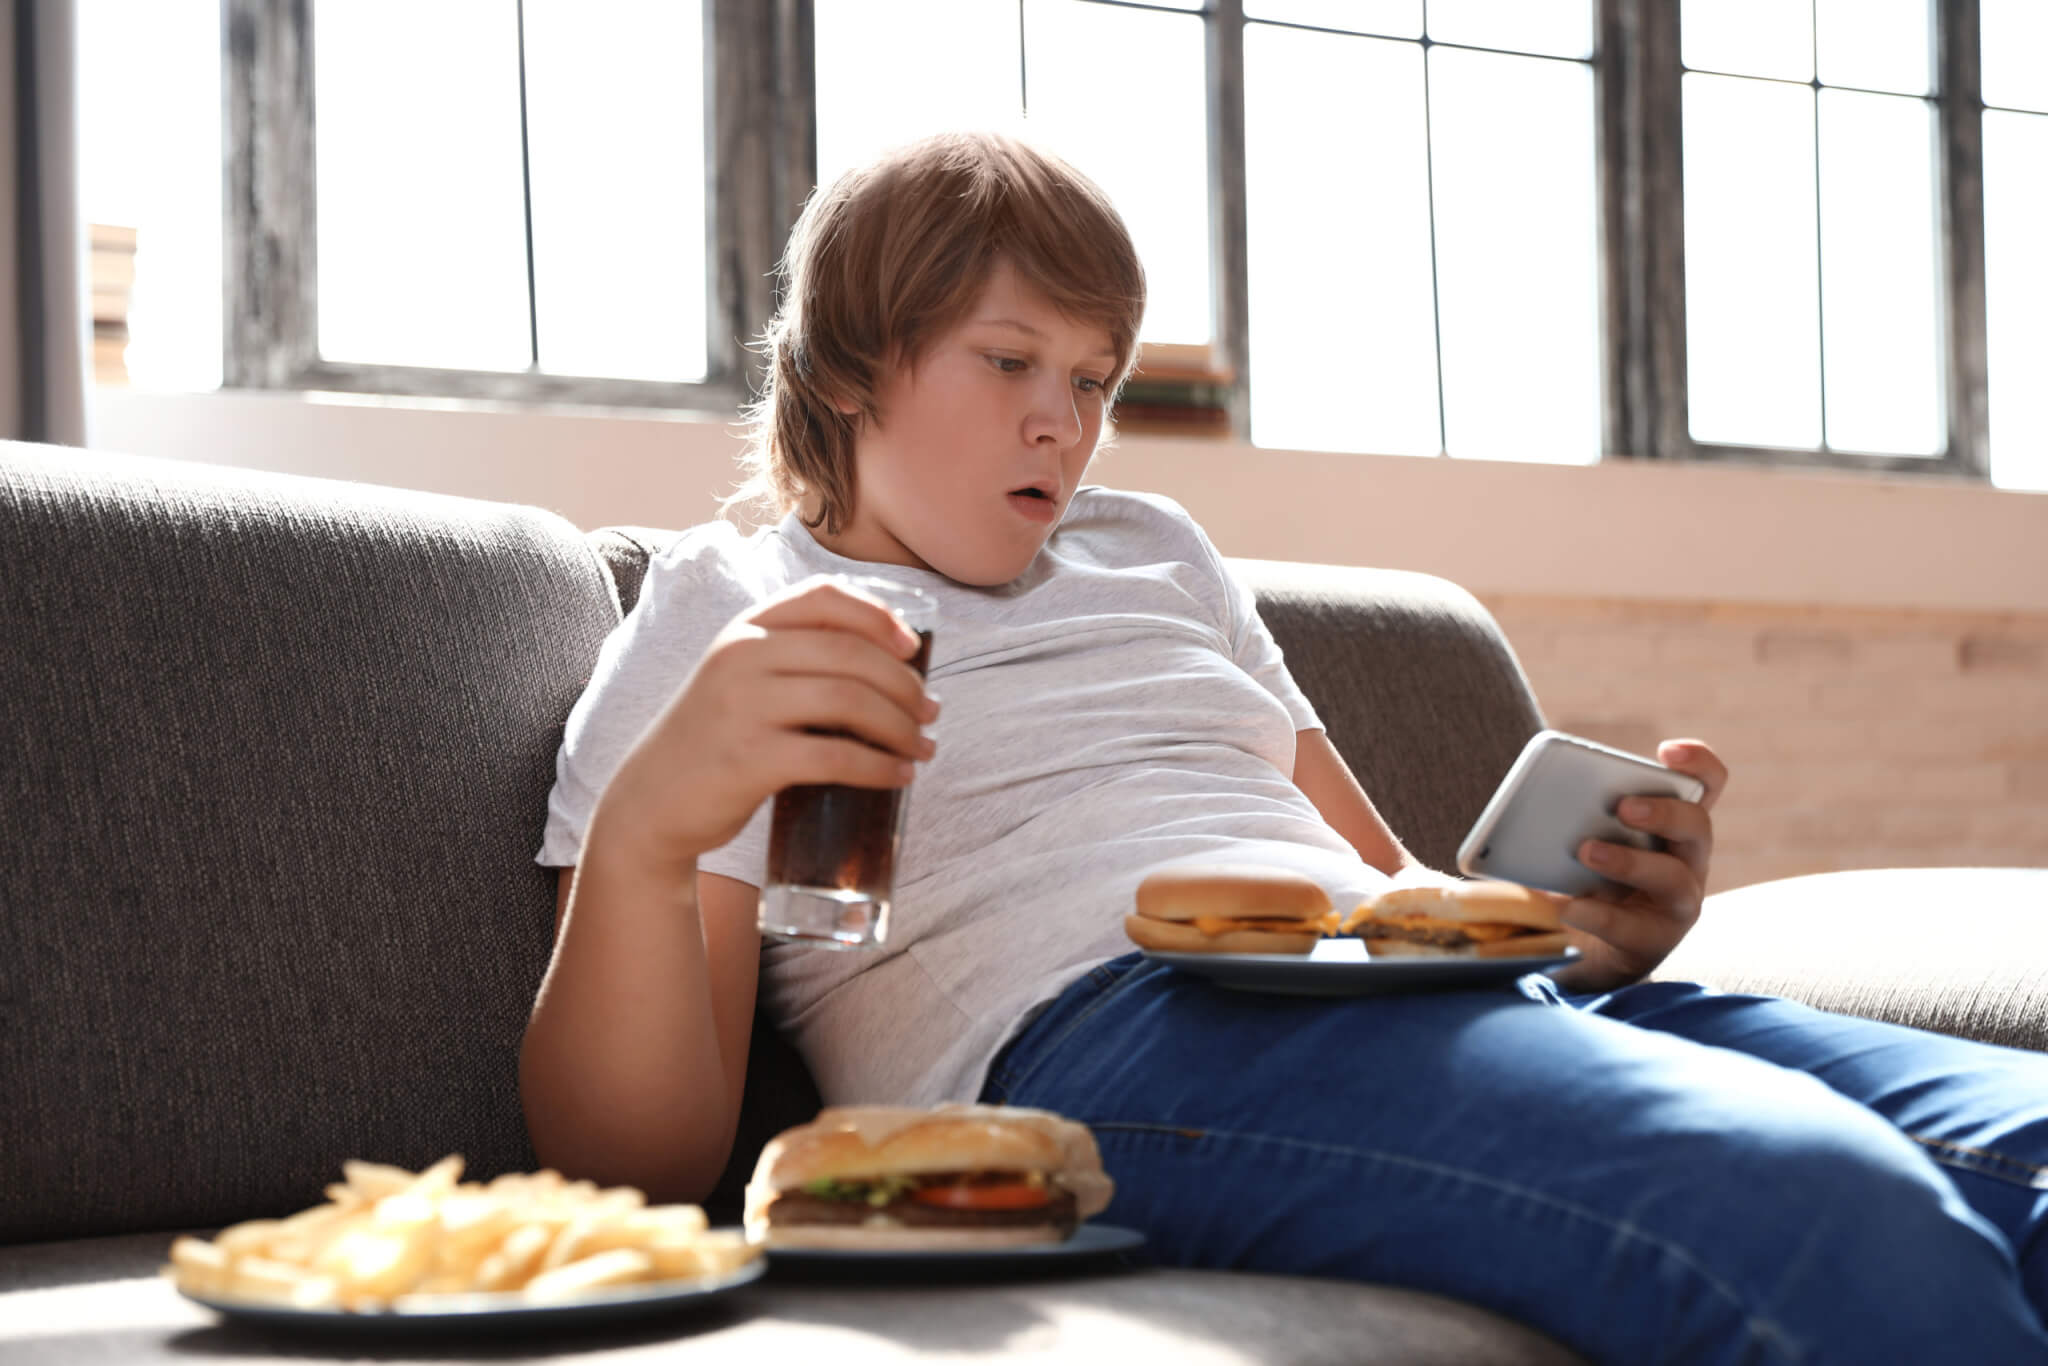 Teen boy eating junk food, drinking soda while looking at smartphone